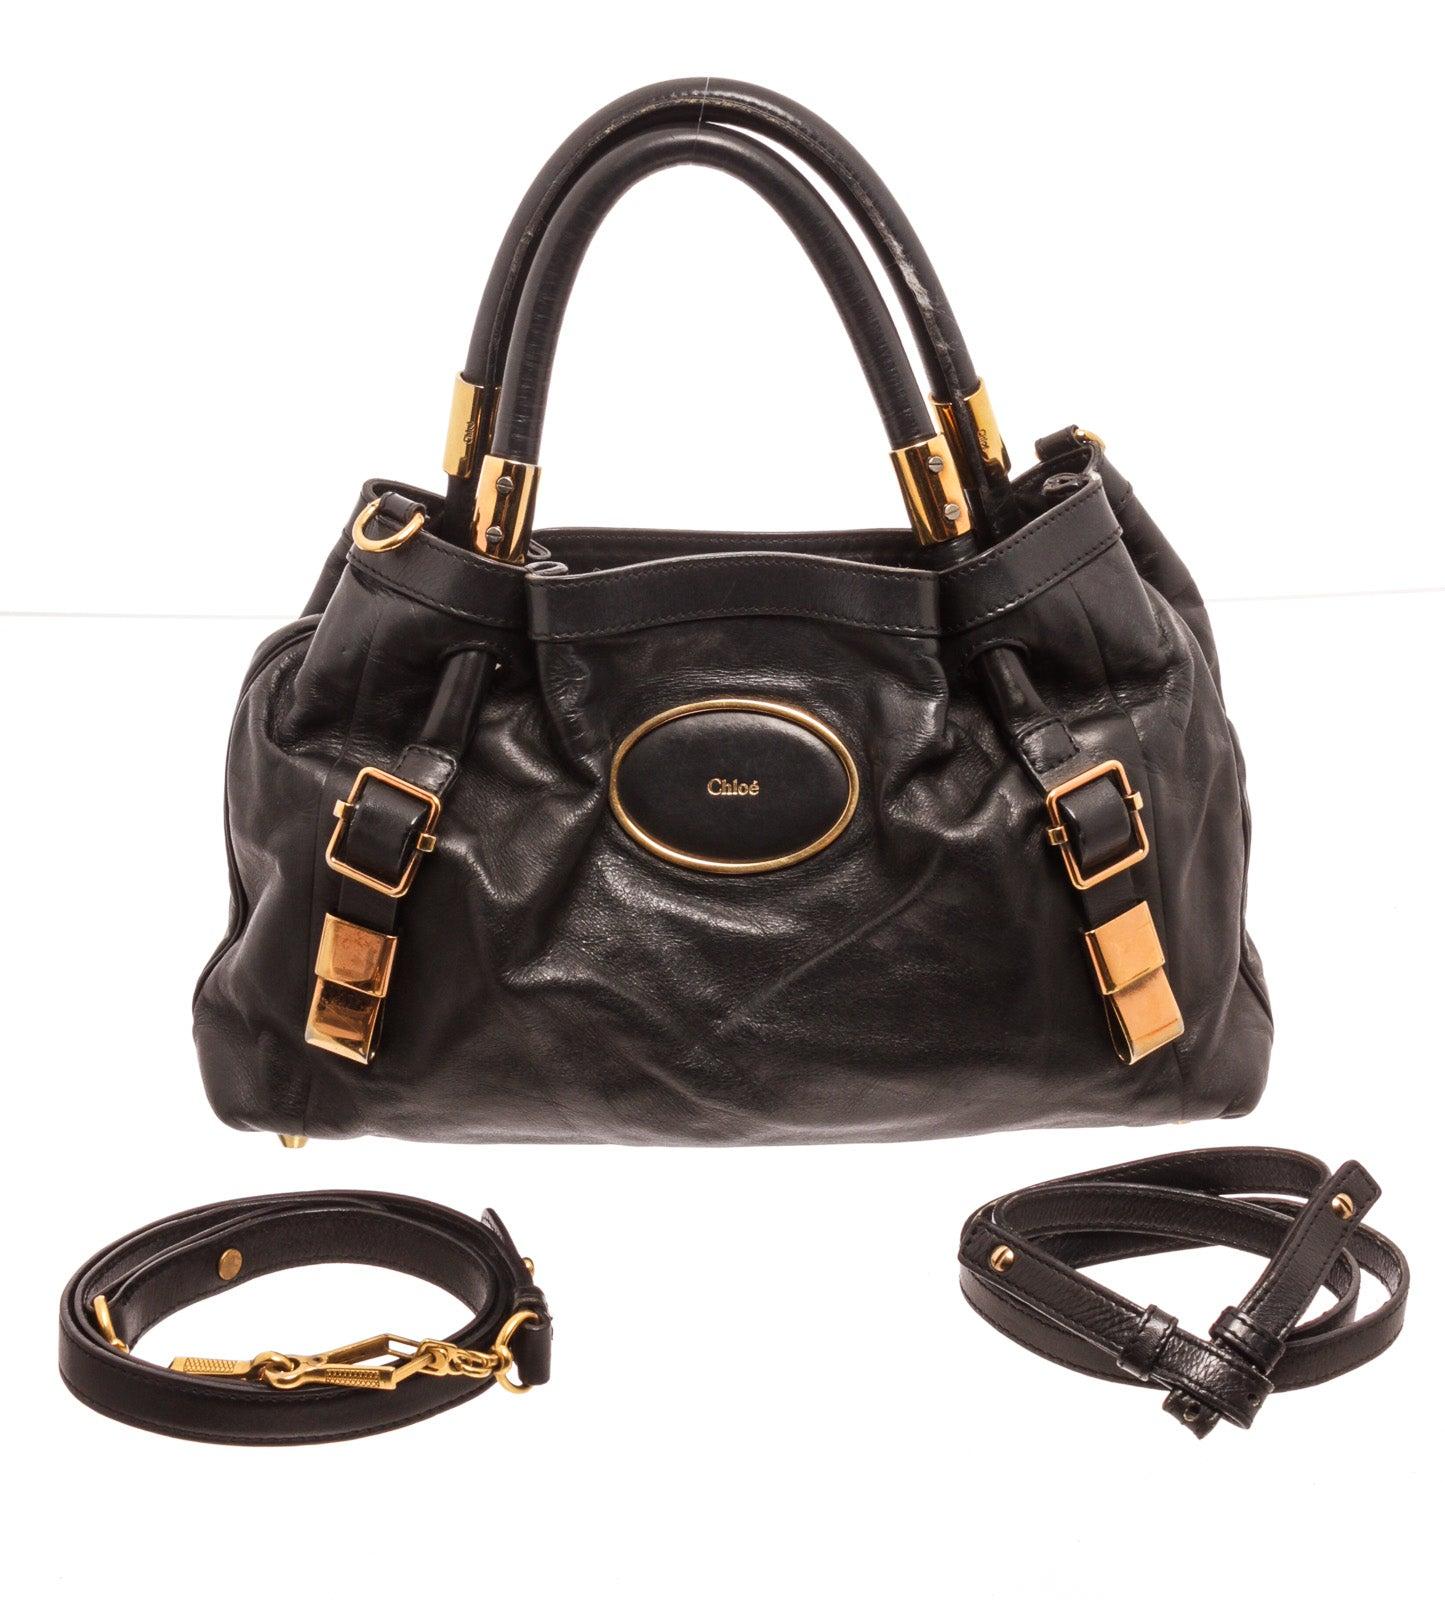 Chloe Black Leather Victoria Shoulder Bag with gold-tone hardware, rbrown leather, dual shoulder straps, canvas lining & single interior pocket, open closure.
33188MSC